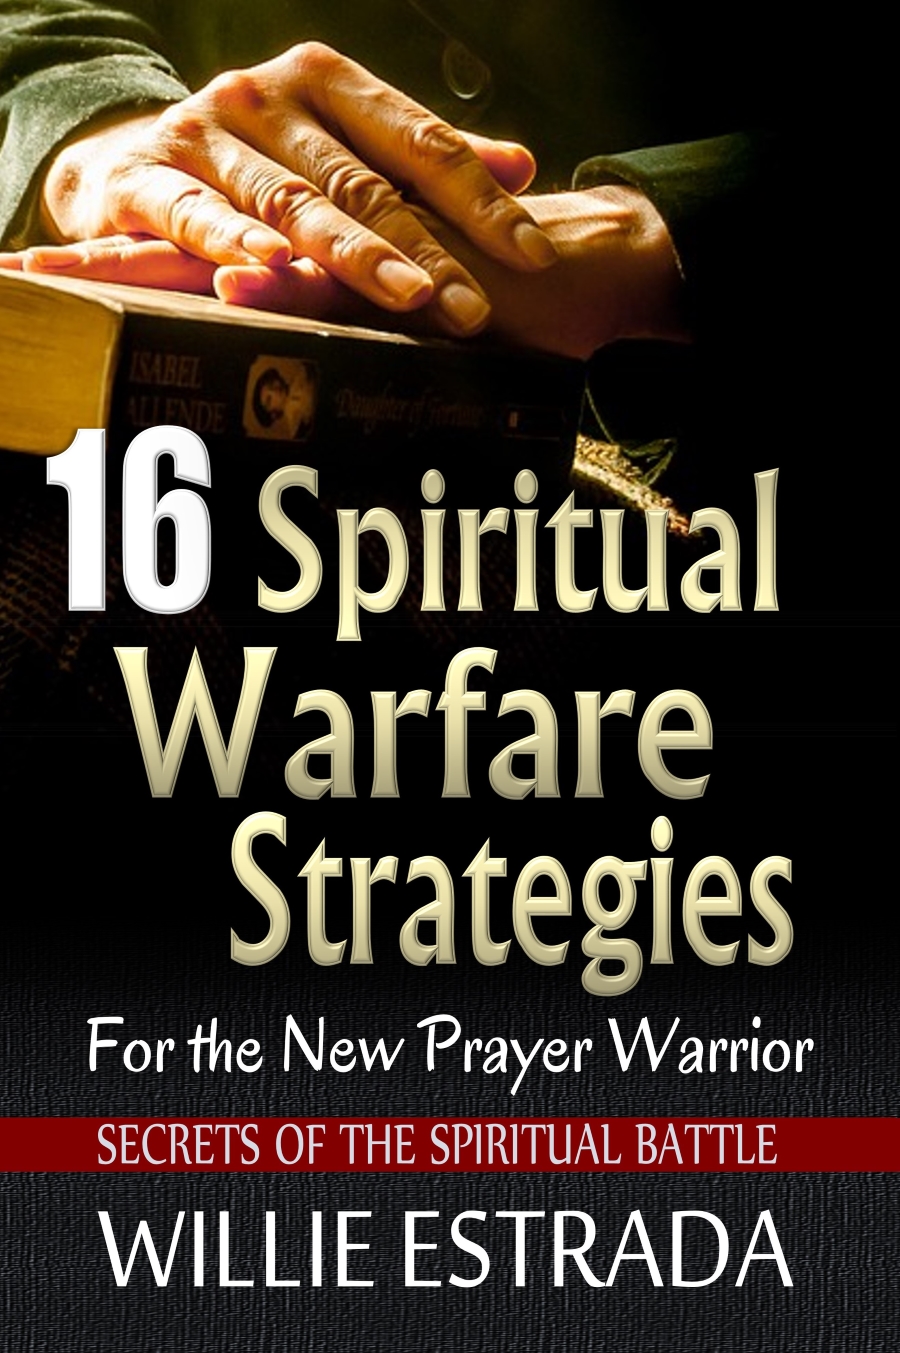 FREE: 16 Spiritual Warfare Strategies for the New Prayer Warrior by Willie Estrada